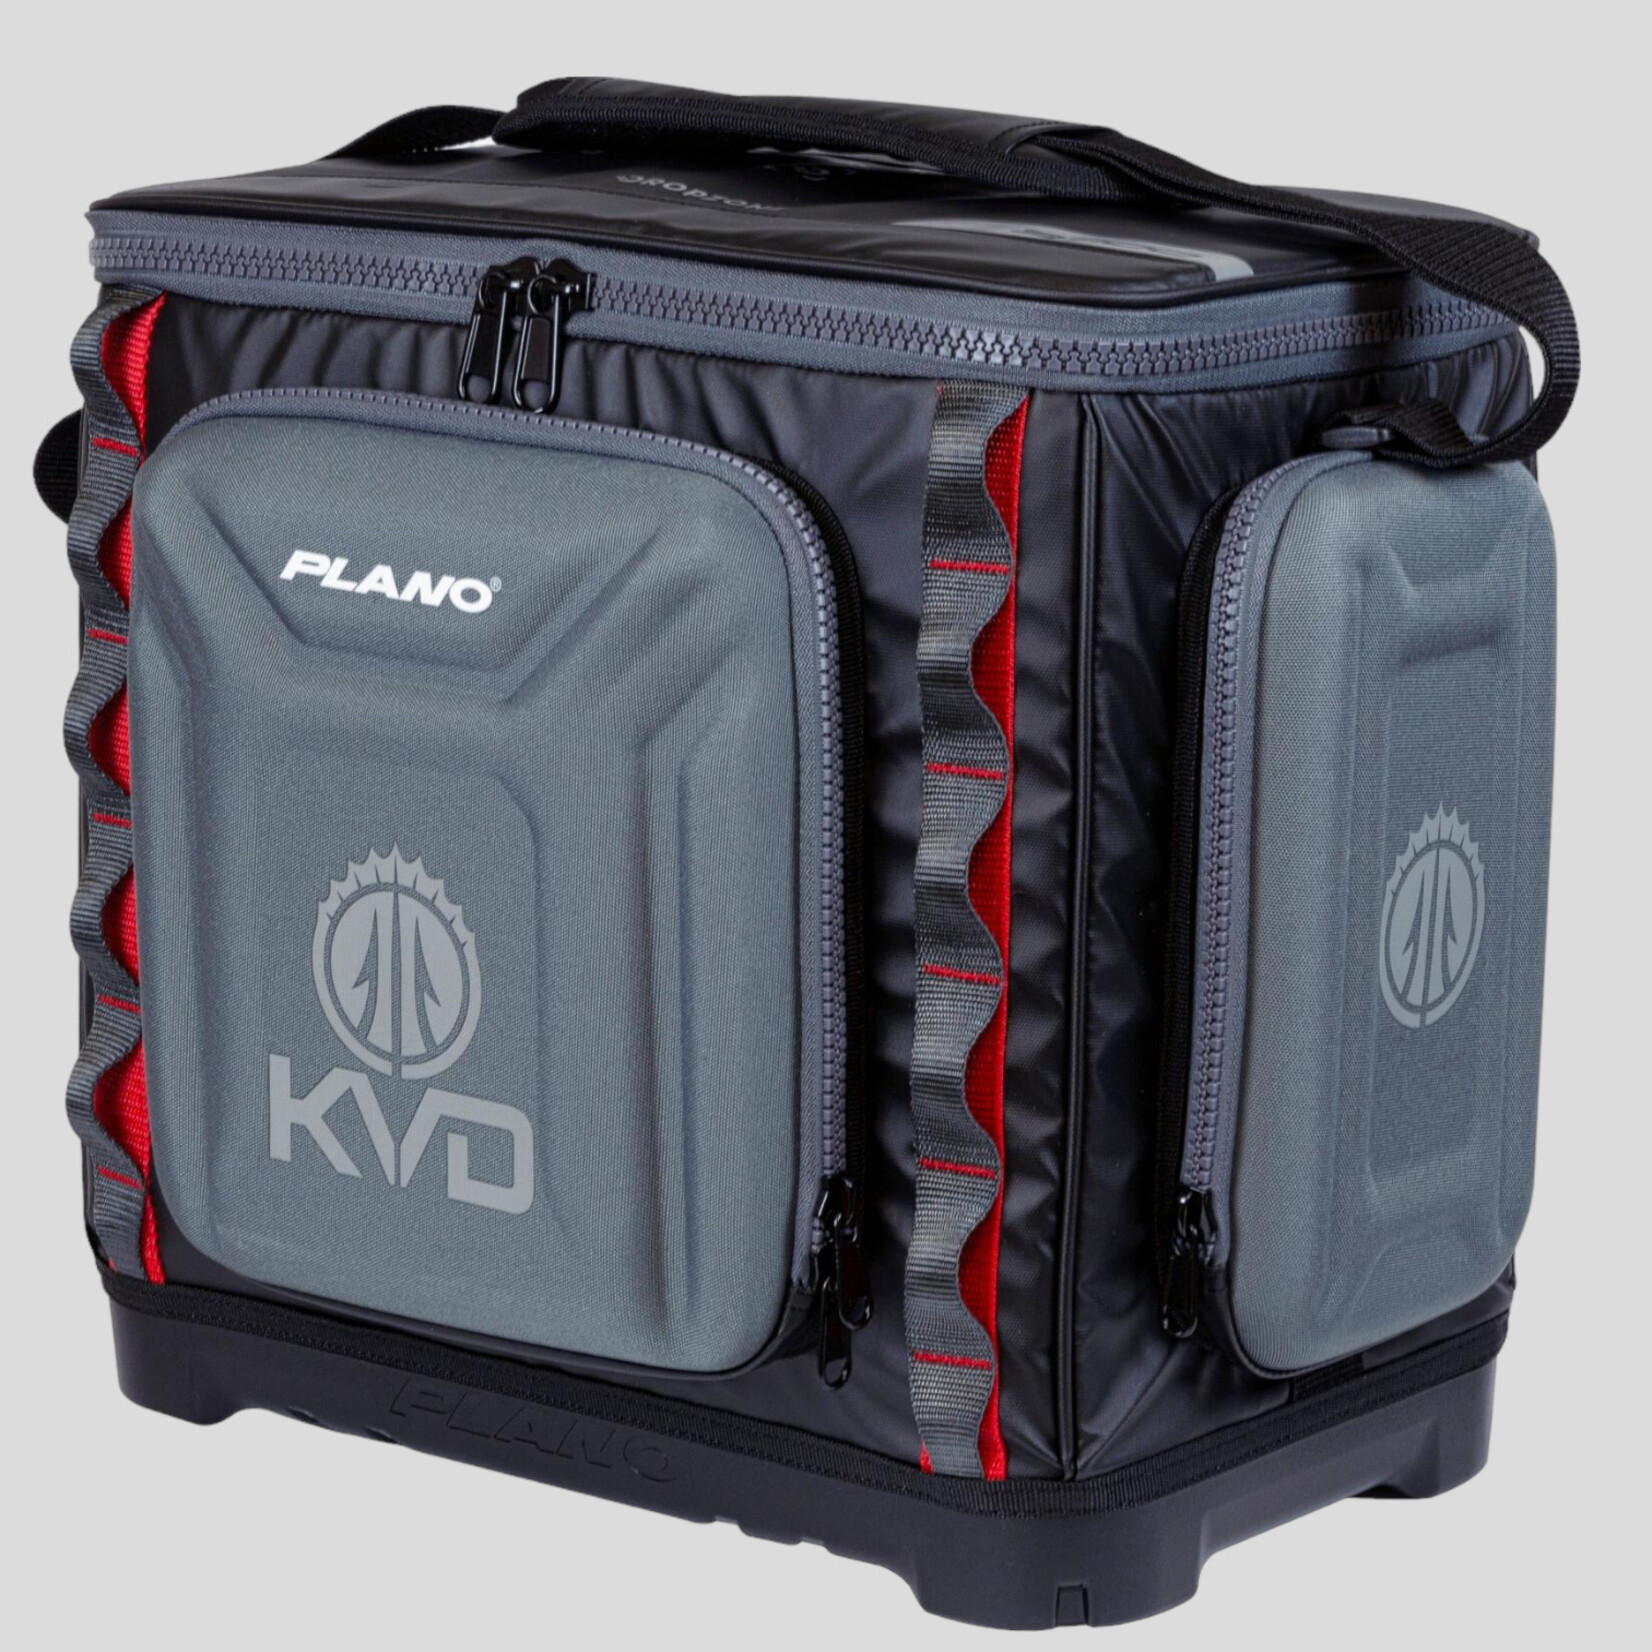 Plano Plano KVD Signature Series Tackle Bag